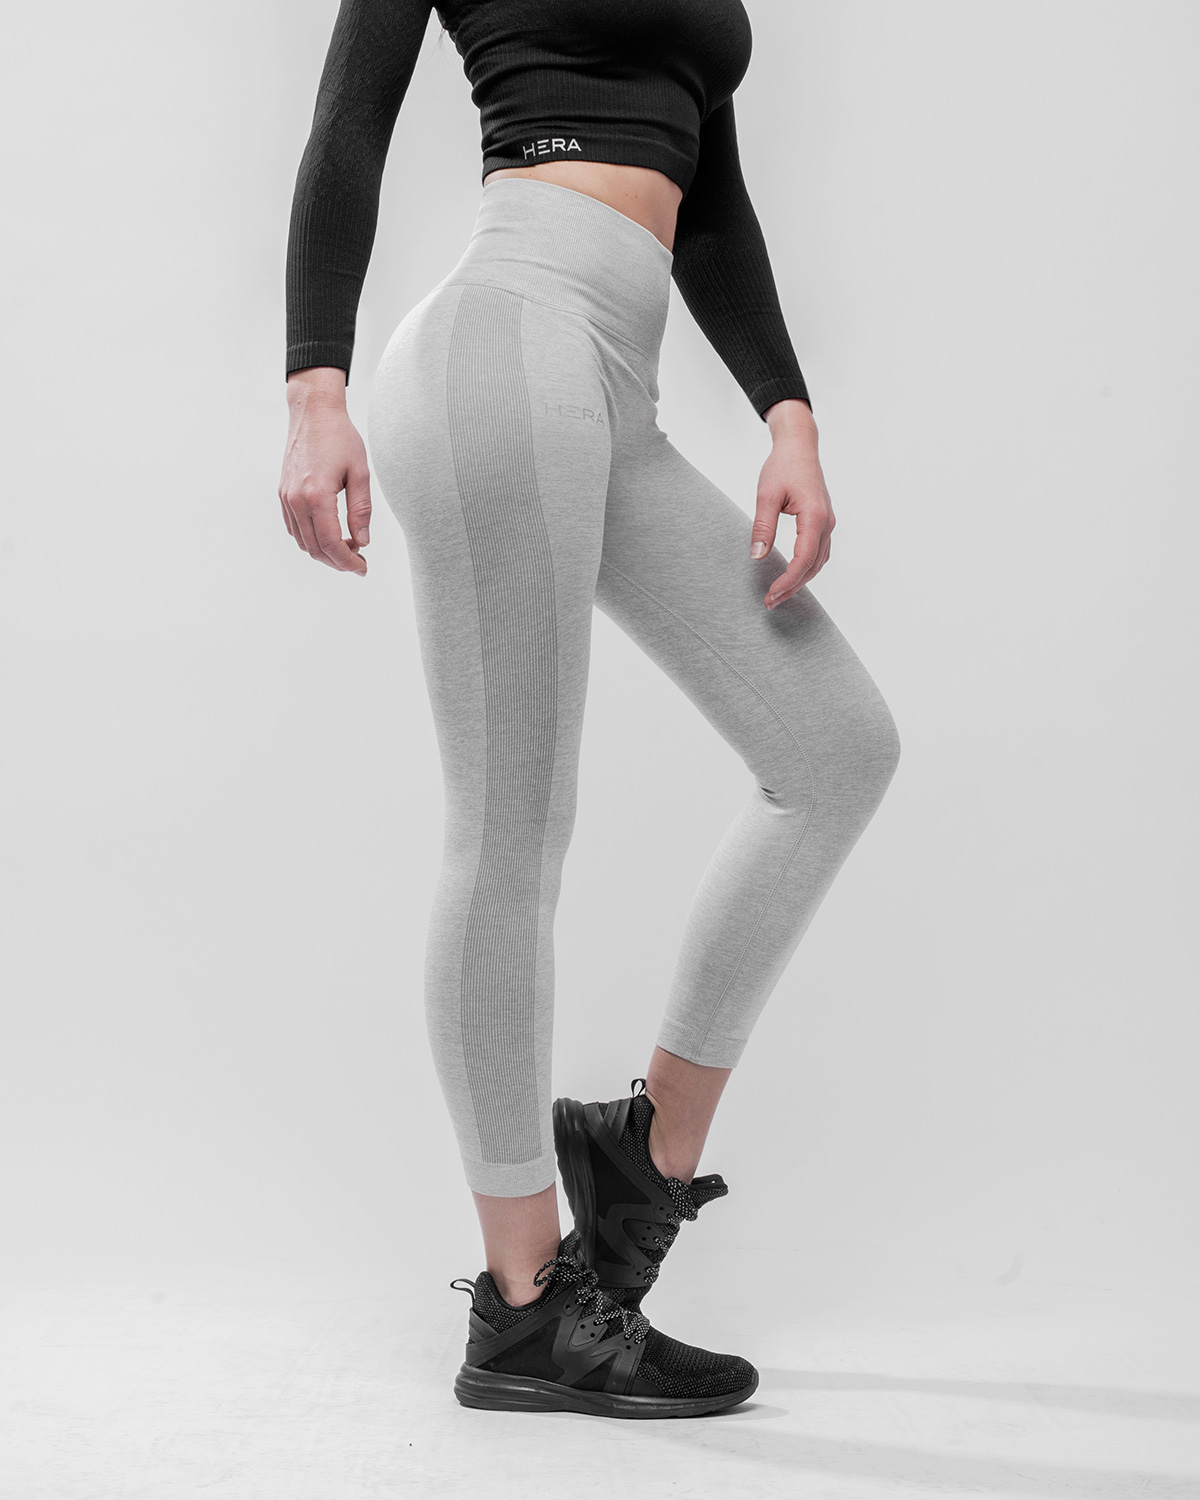 Hera Leggings – YELLA Activewear